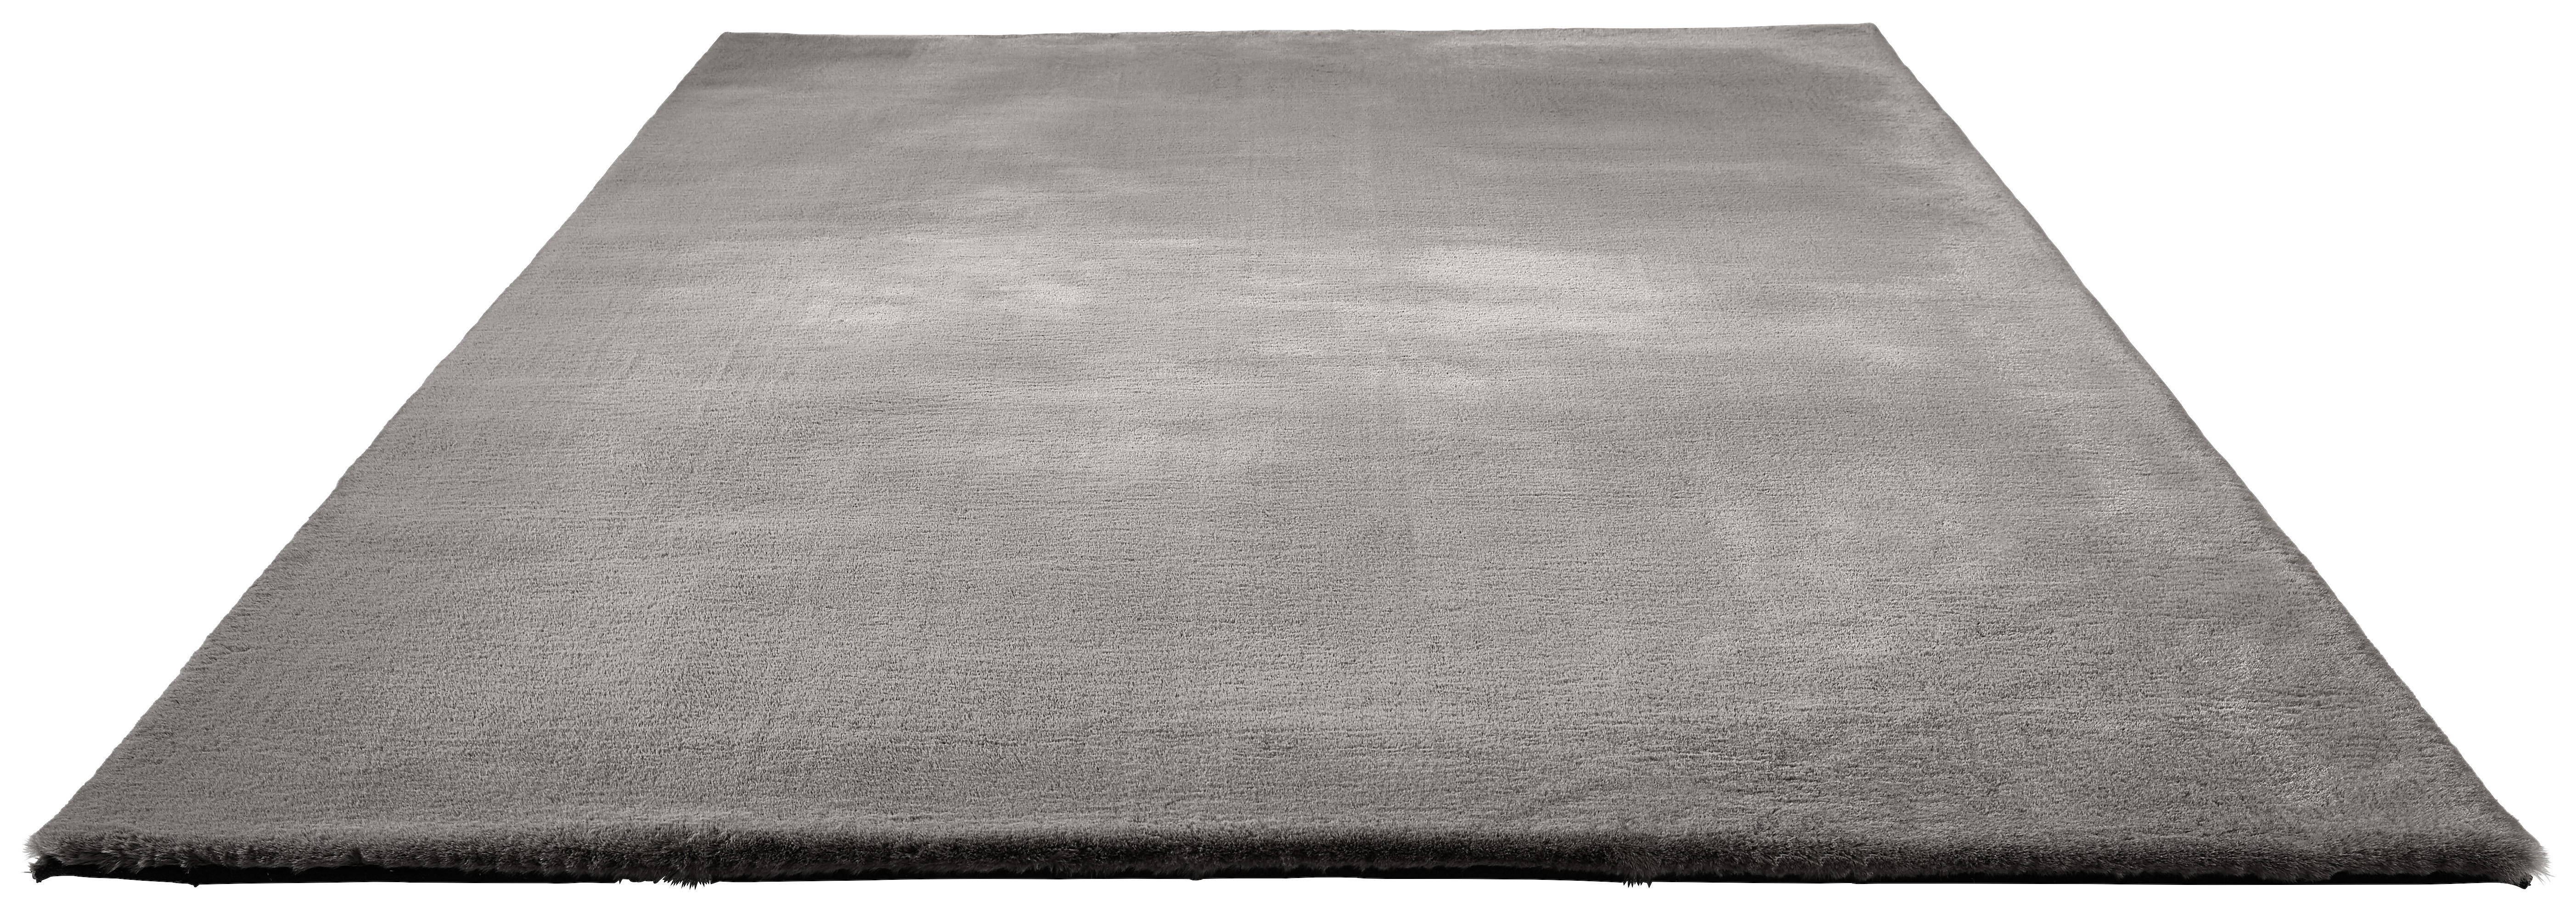 HOCHFLORTEPPICH  160/230 cm  gewebt  Grau   - Grau, Design, Textil (160/230cm) - Novel